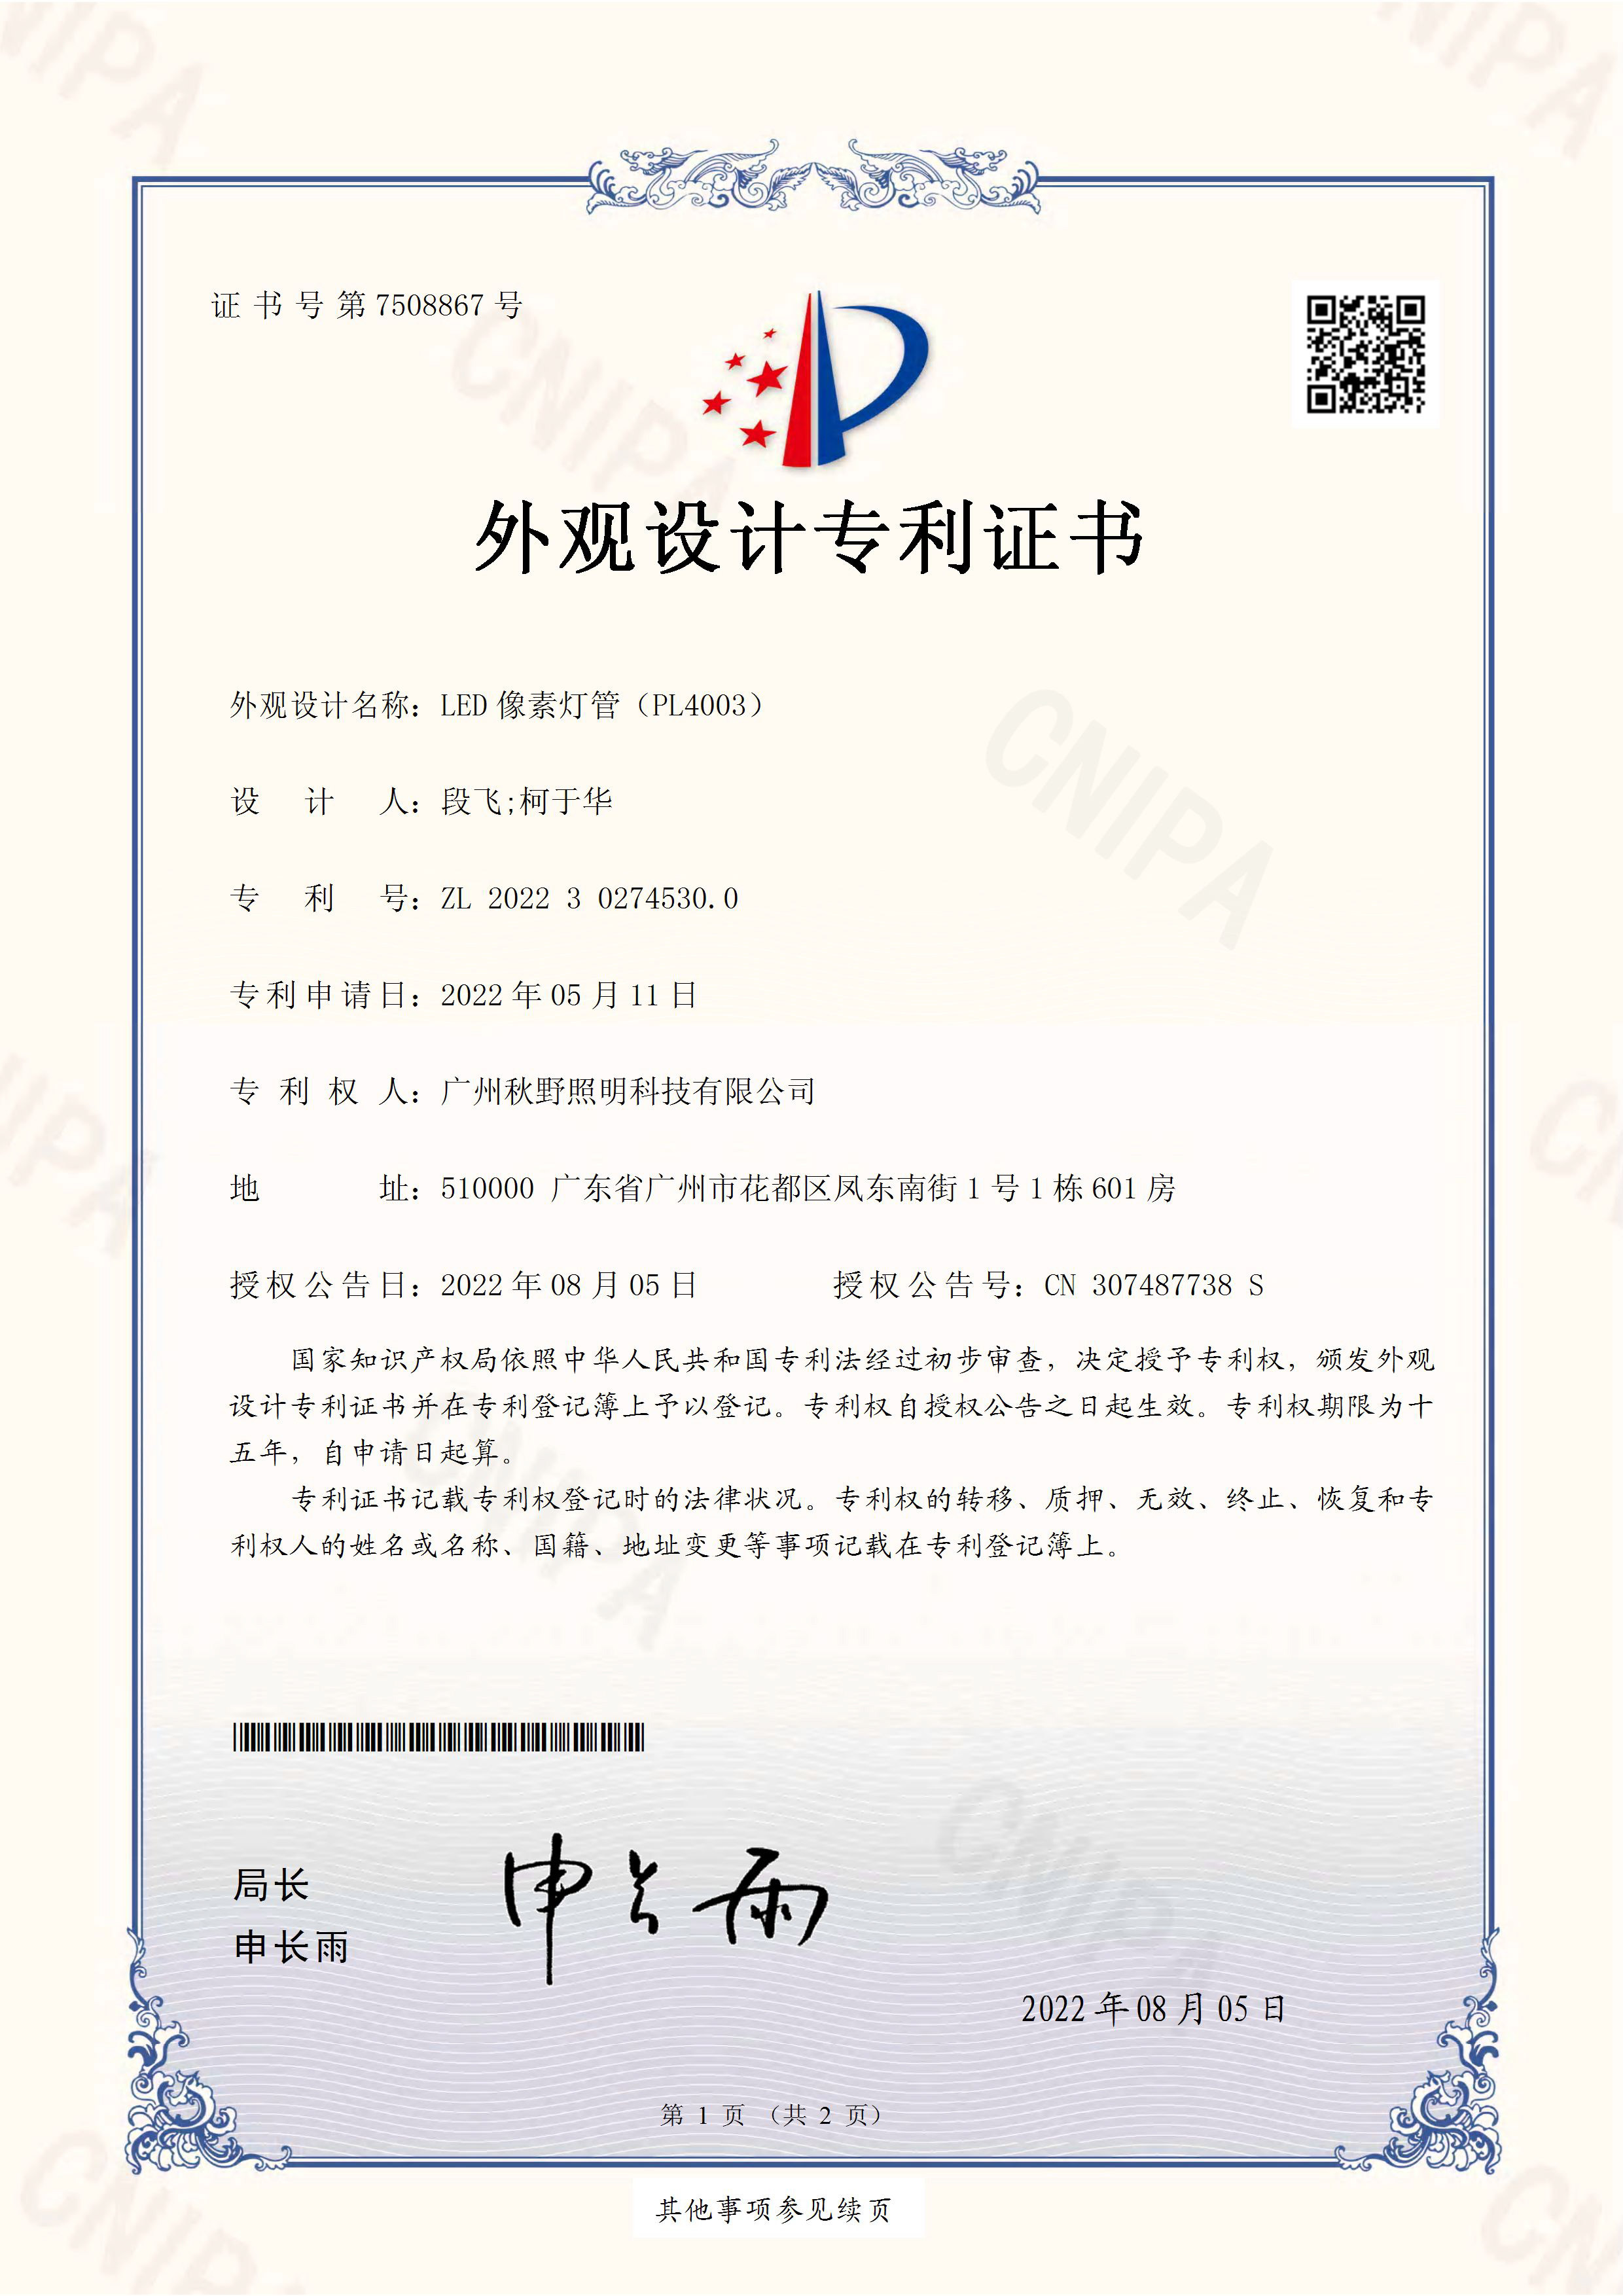 PL4003 Design Patent Certificate